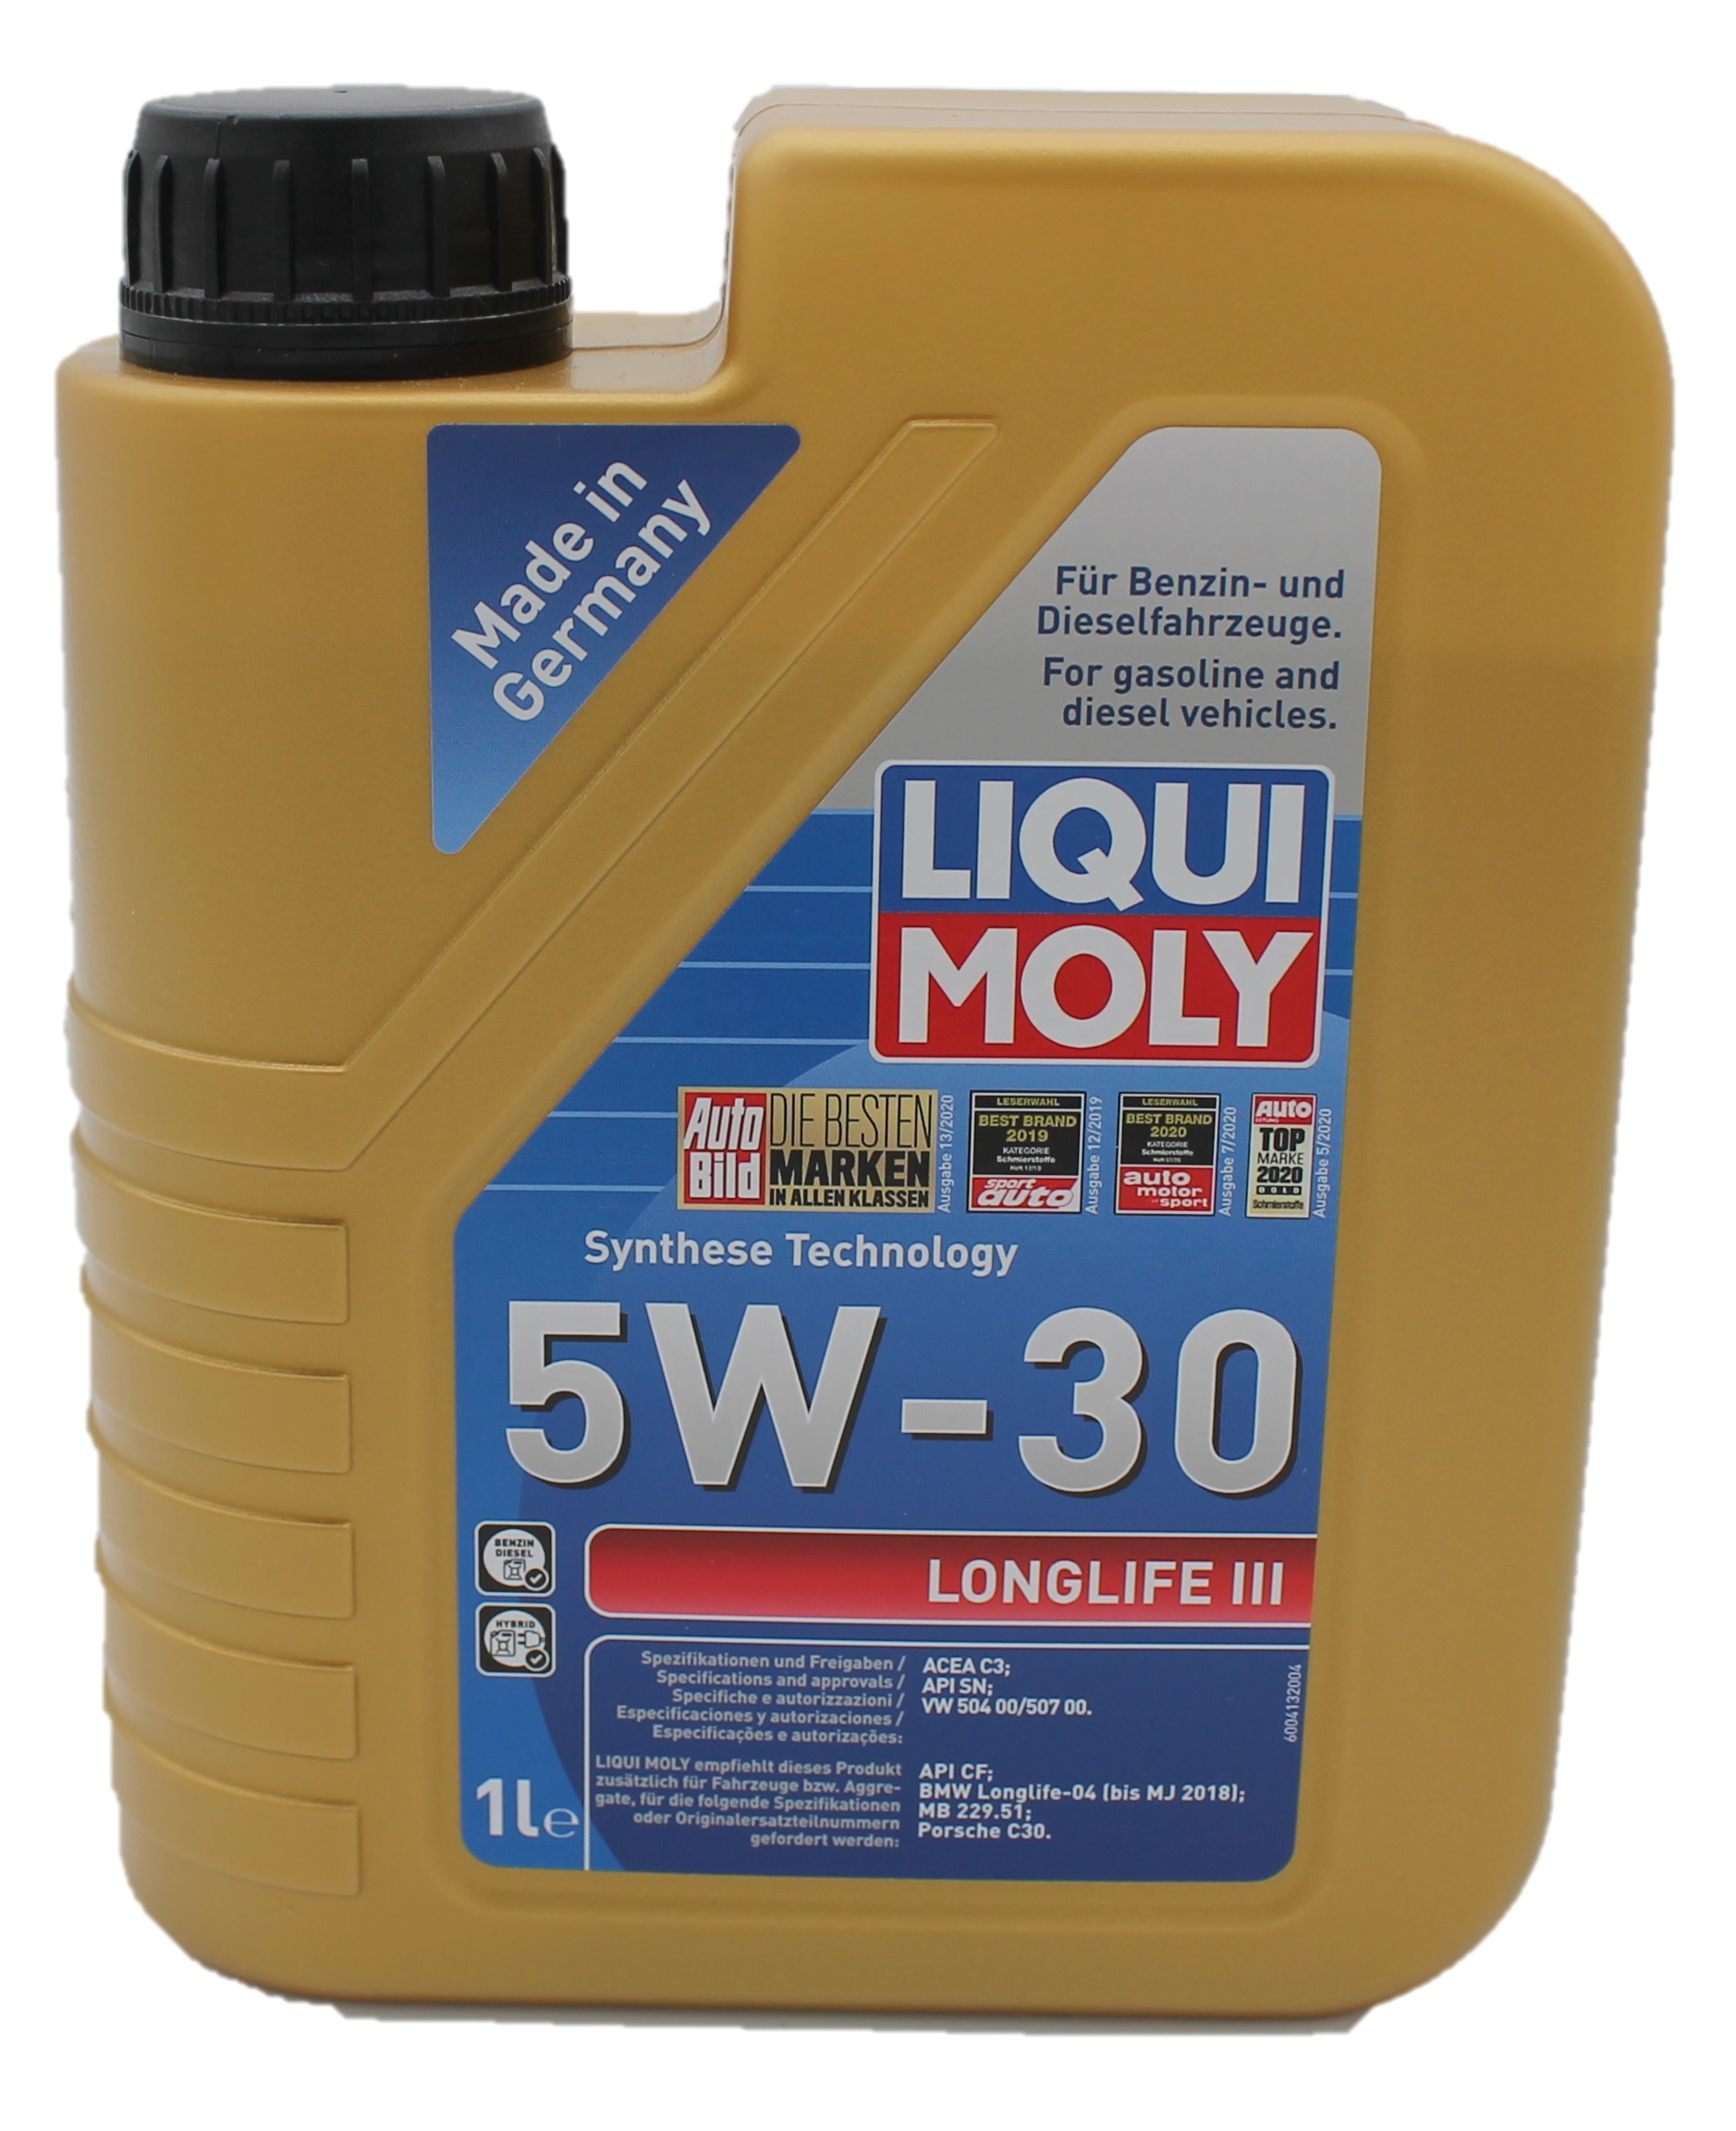 LIQUI MOLY LONGLIFE III 5W-30 (4 LITRI) – nova